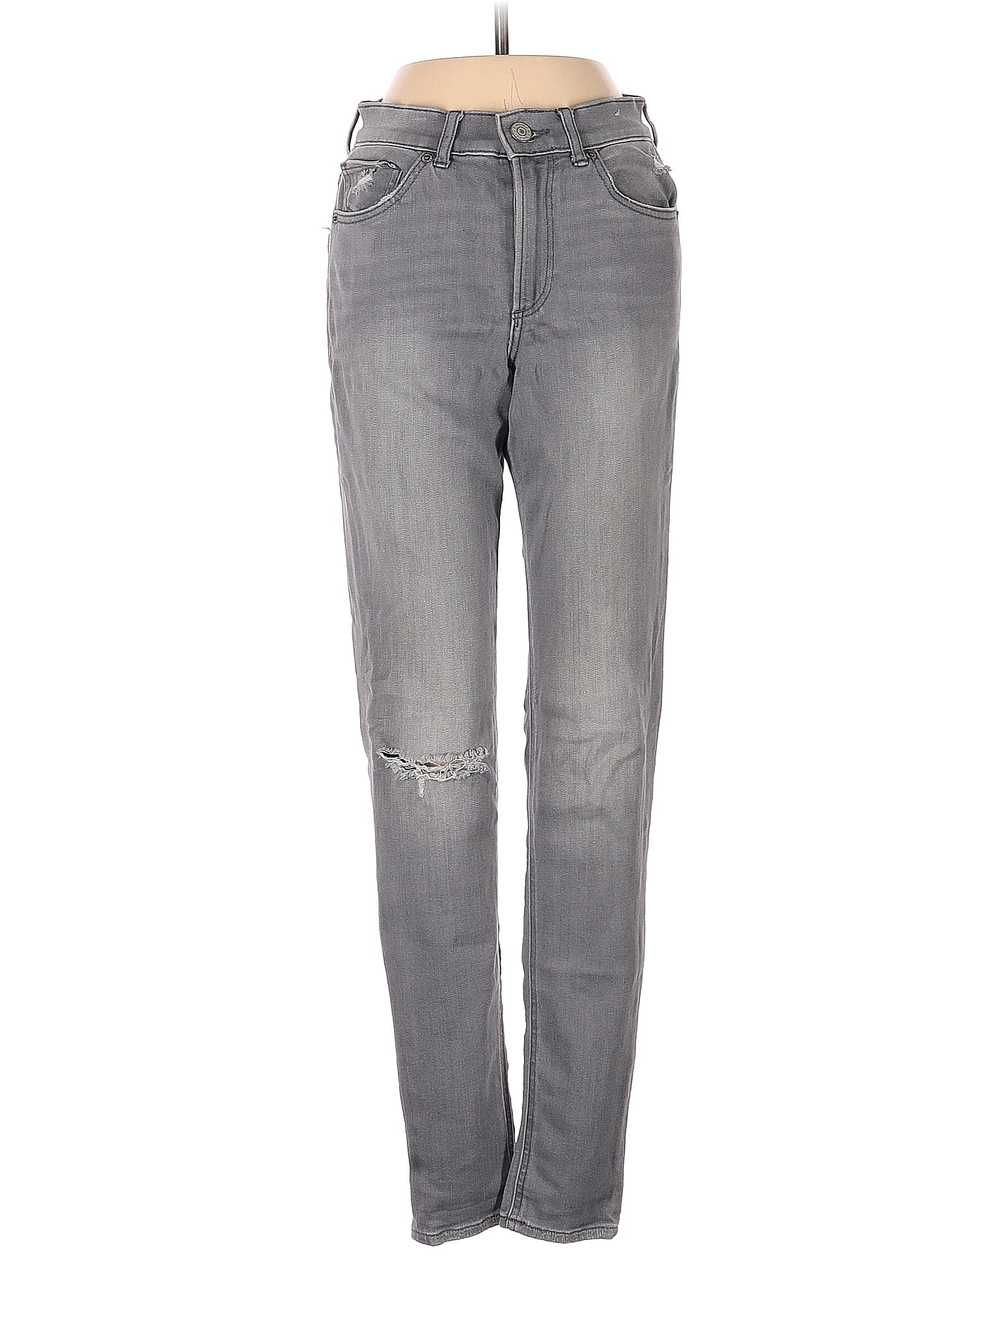 Express Women Gray Jeans 0 - image 2